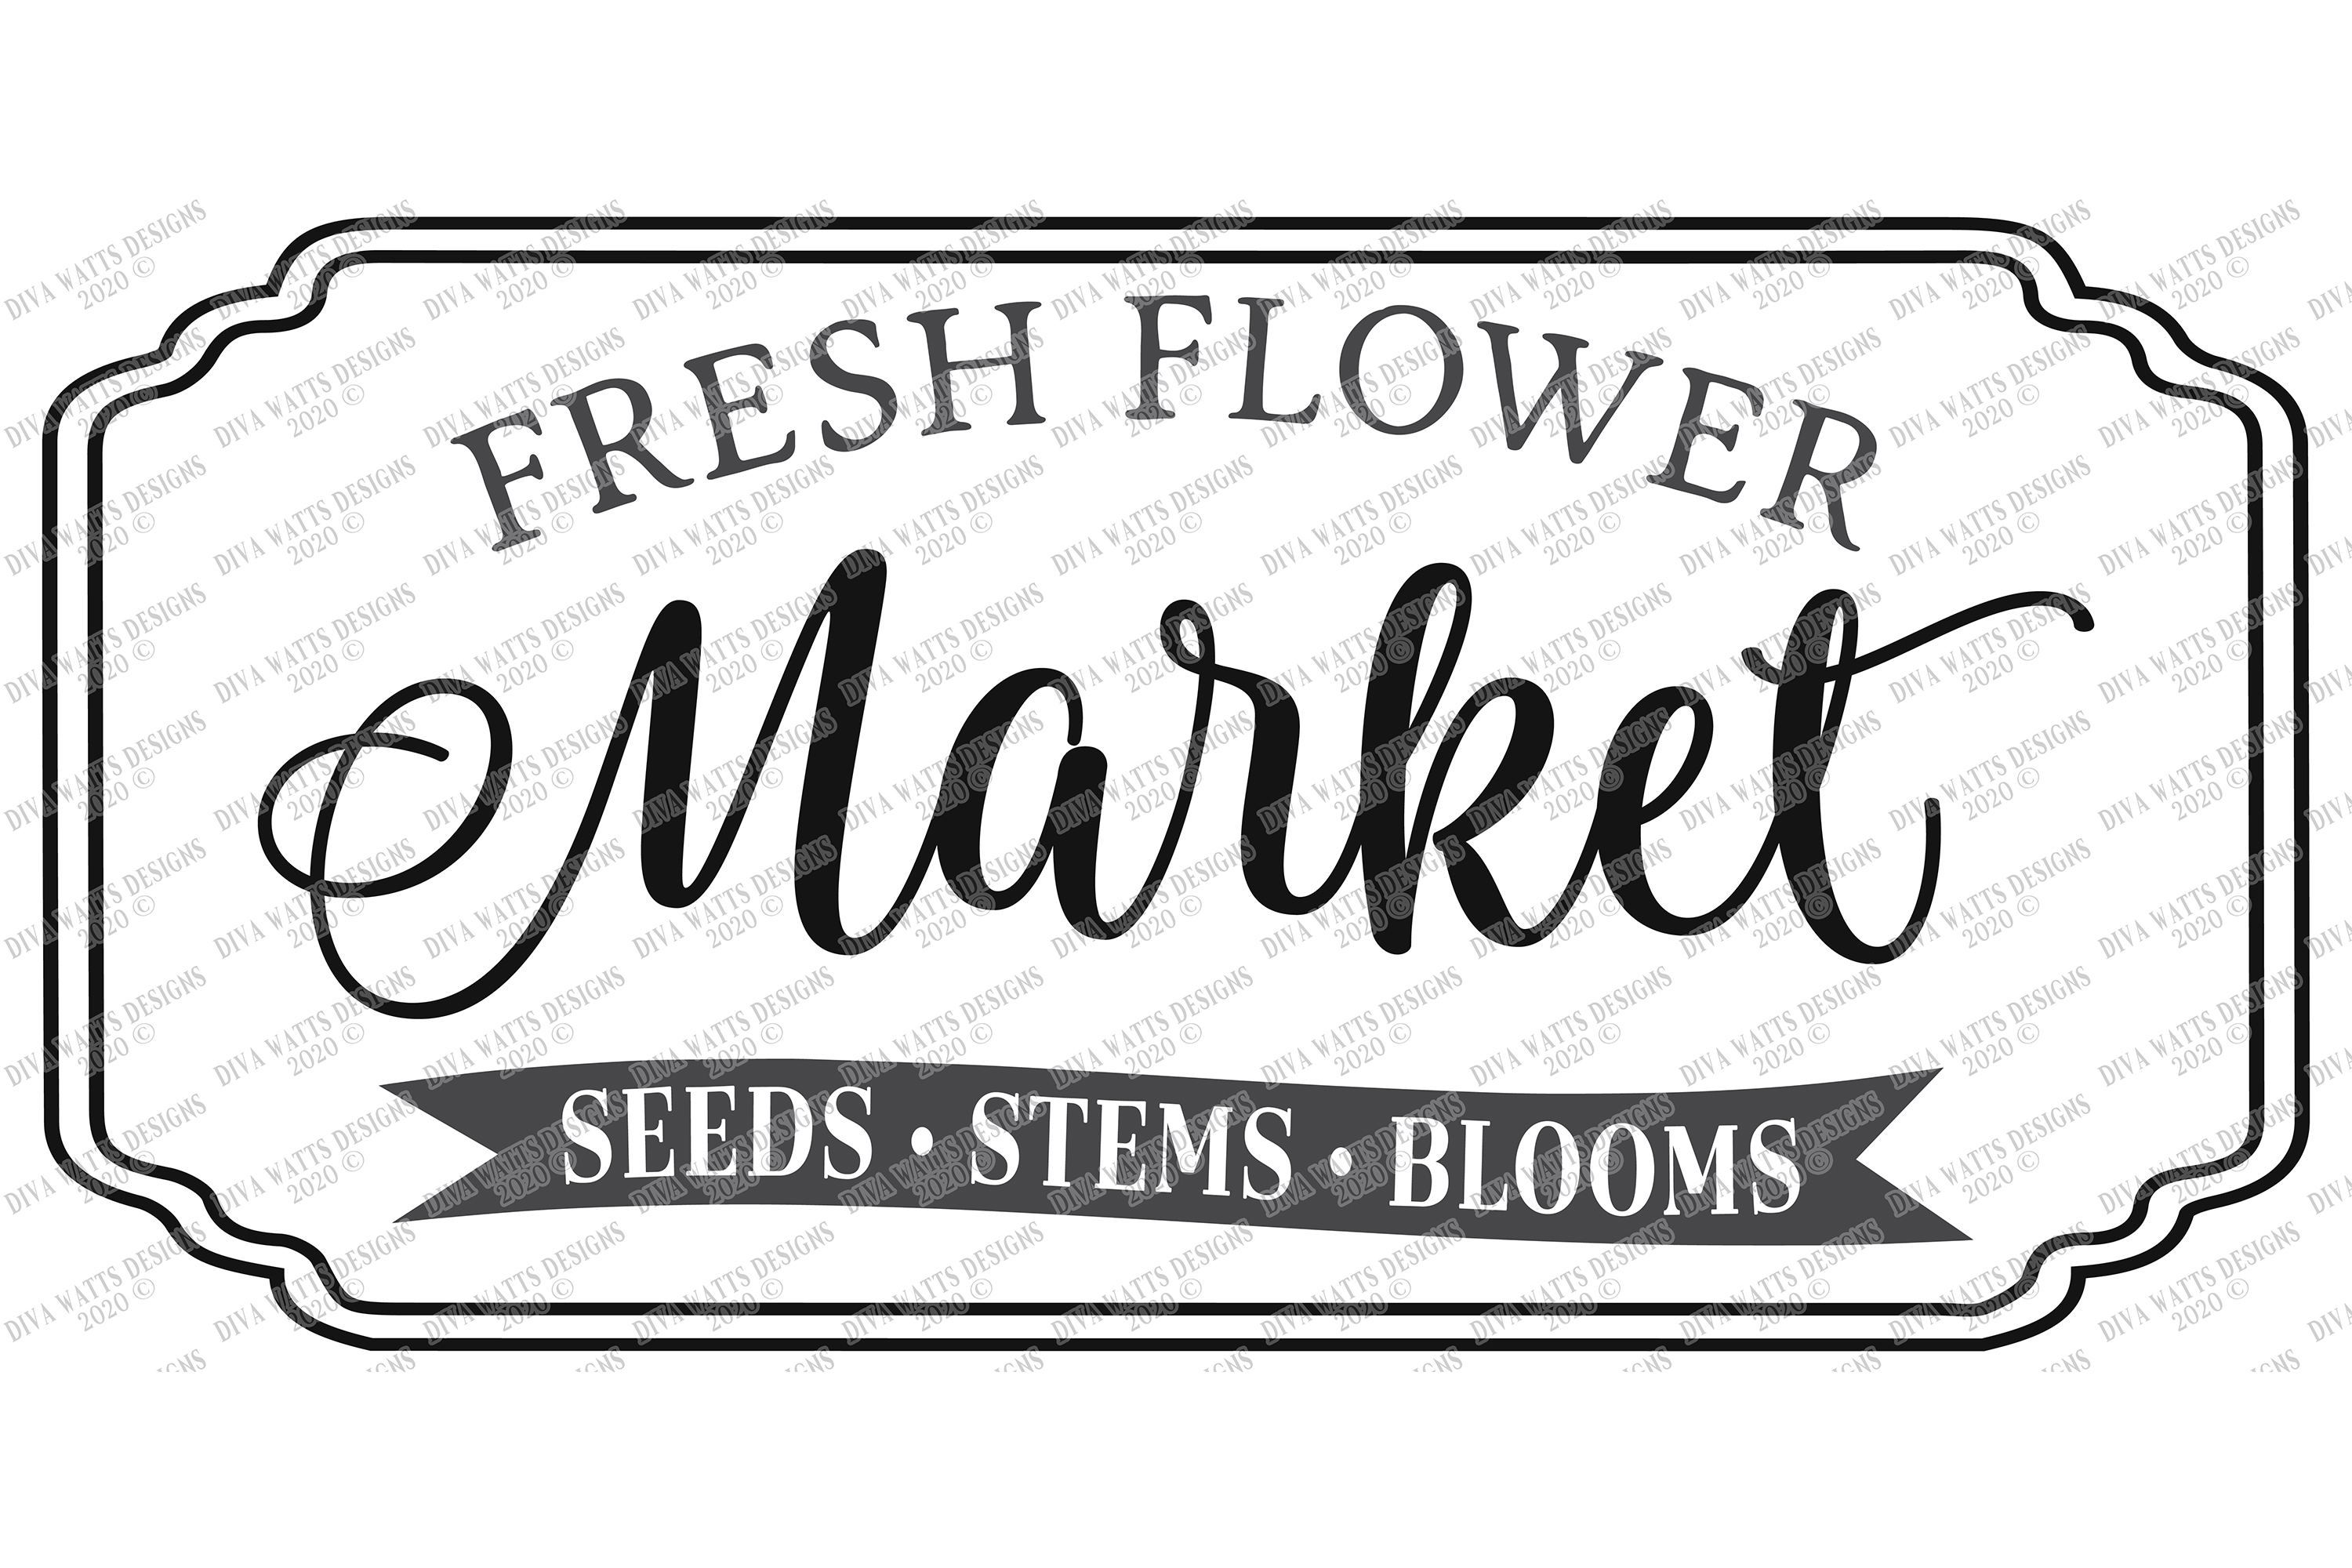 Fresh Flower Market Seeds Stems Blooms - Farmhouse Sign SVG